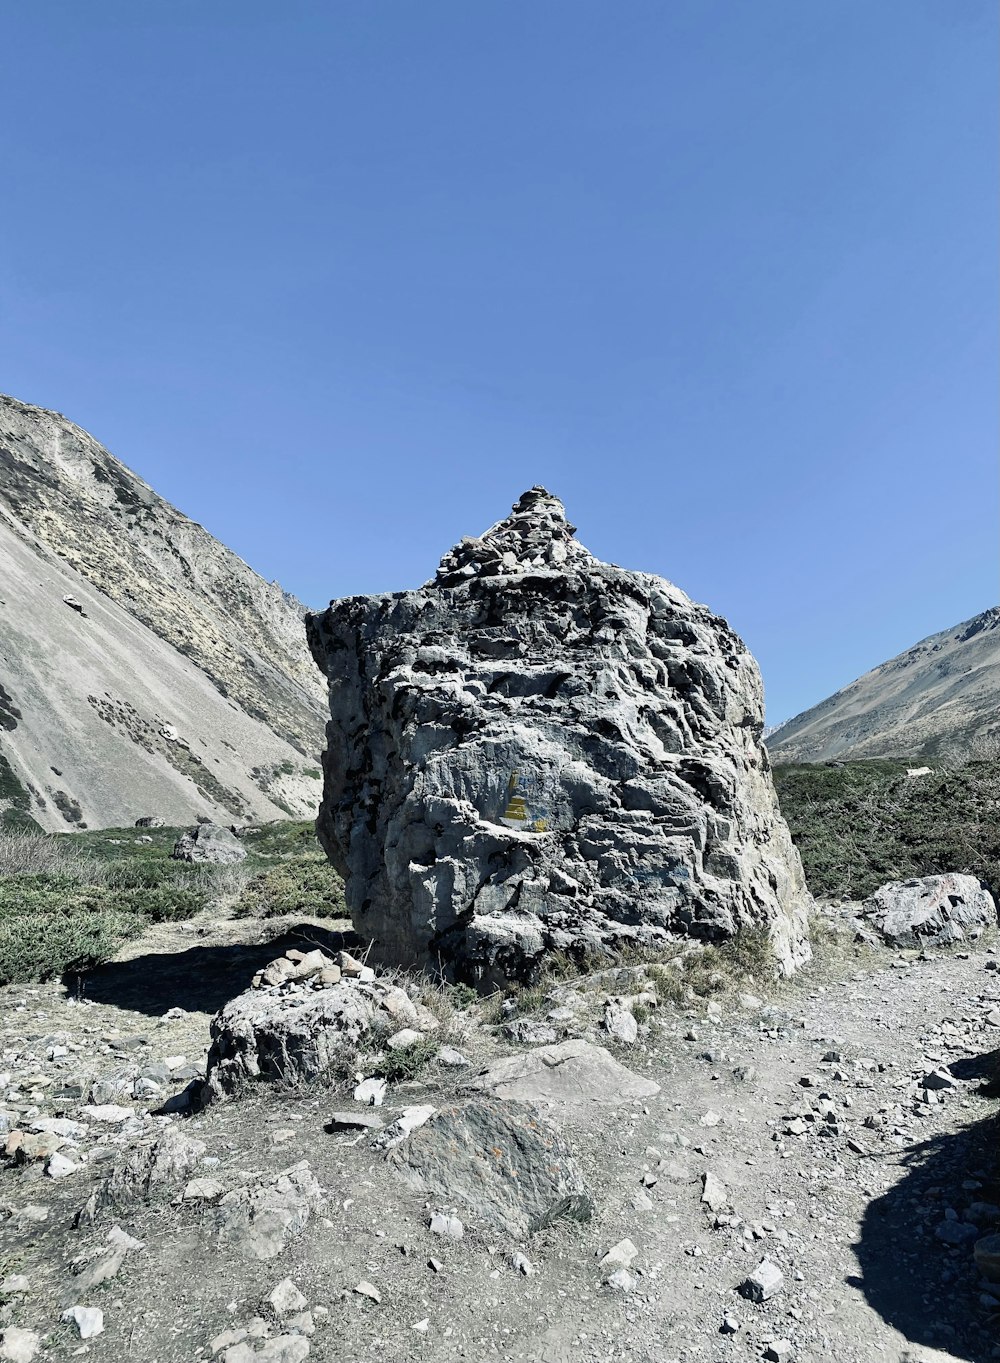 a large rock on a rocky hill